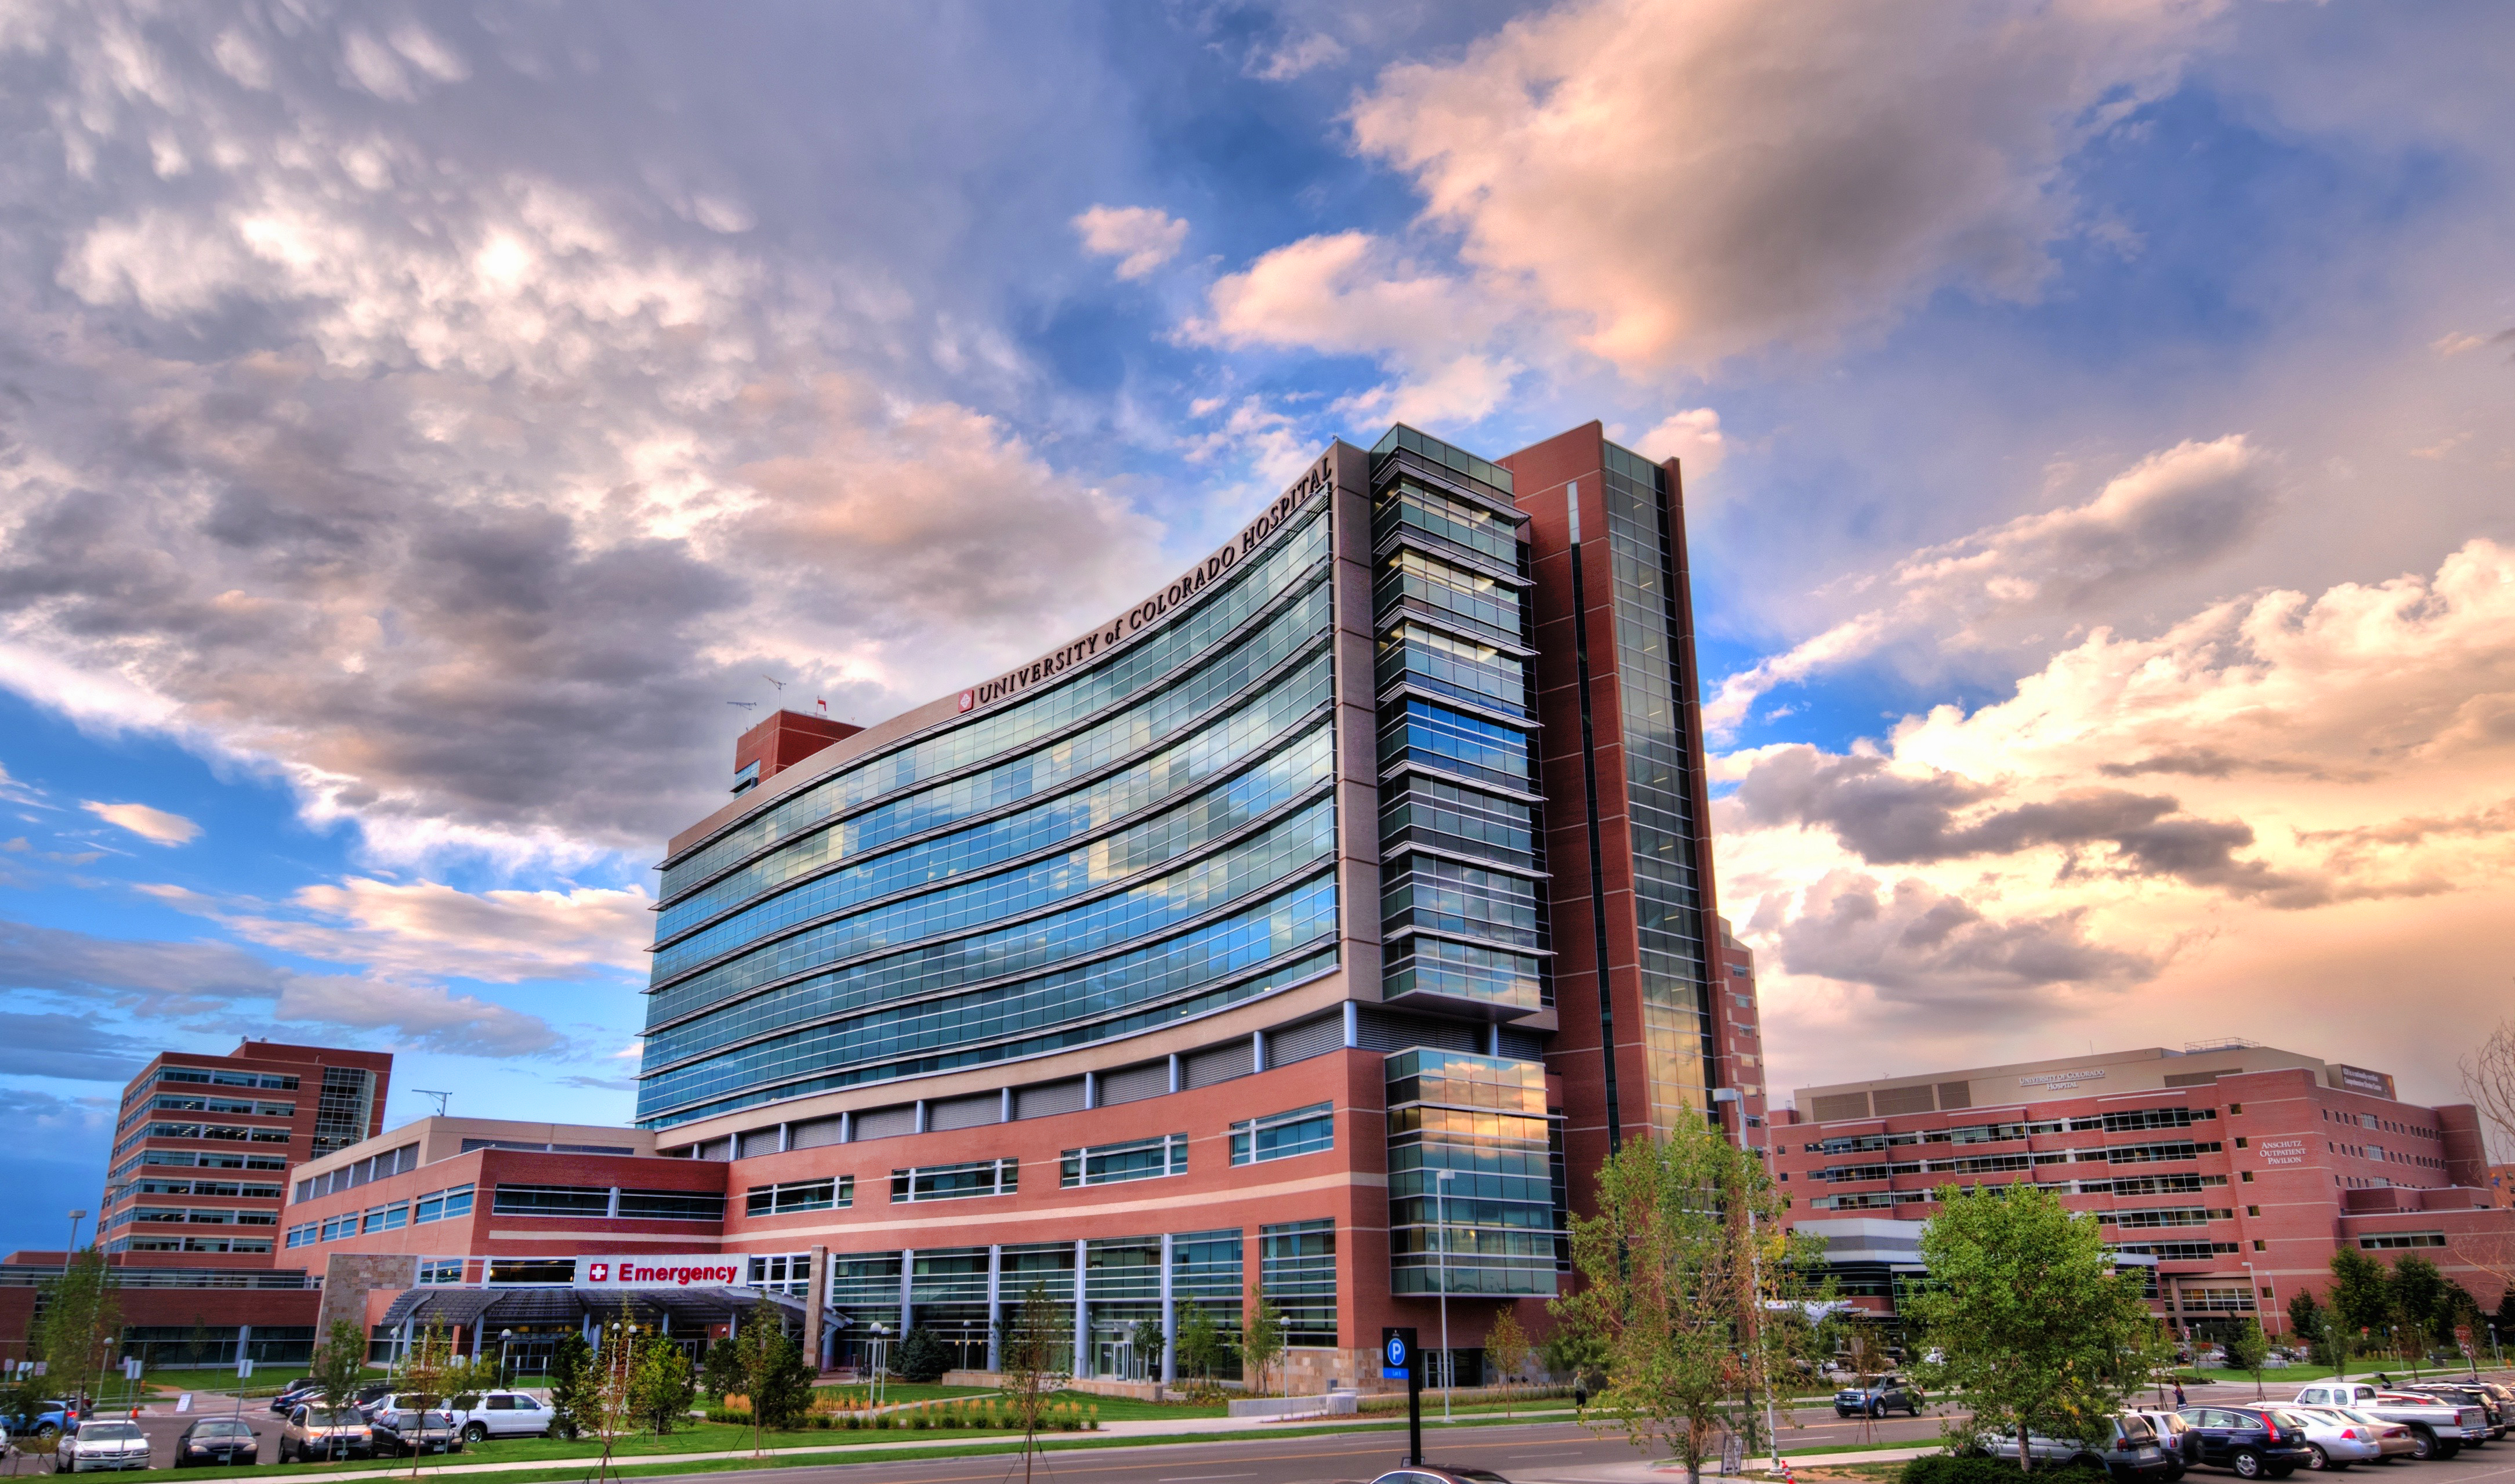 University of Colorado Hospital full